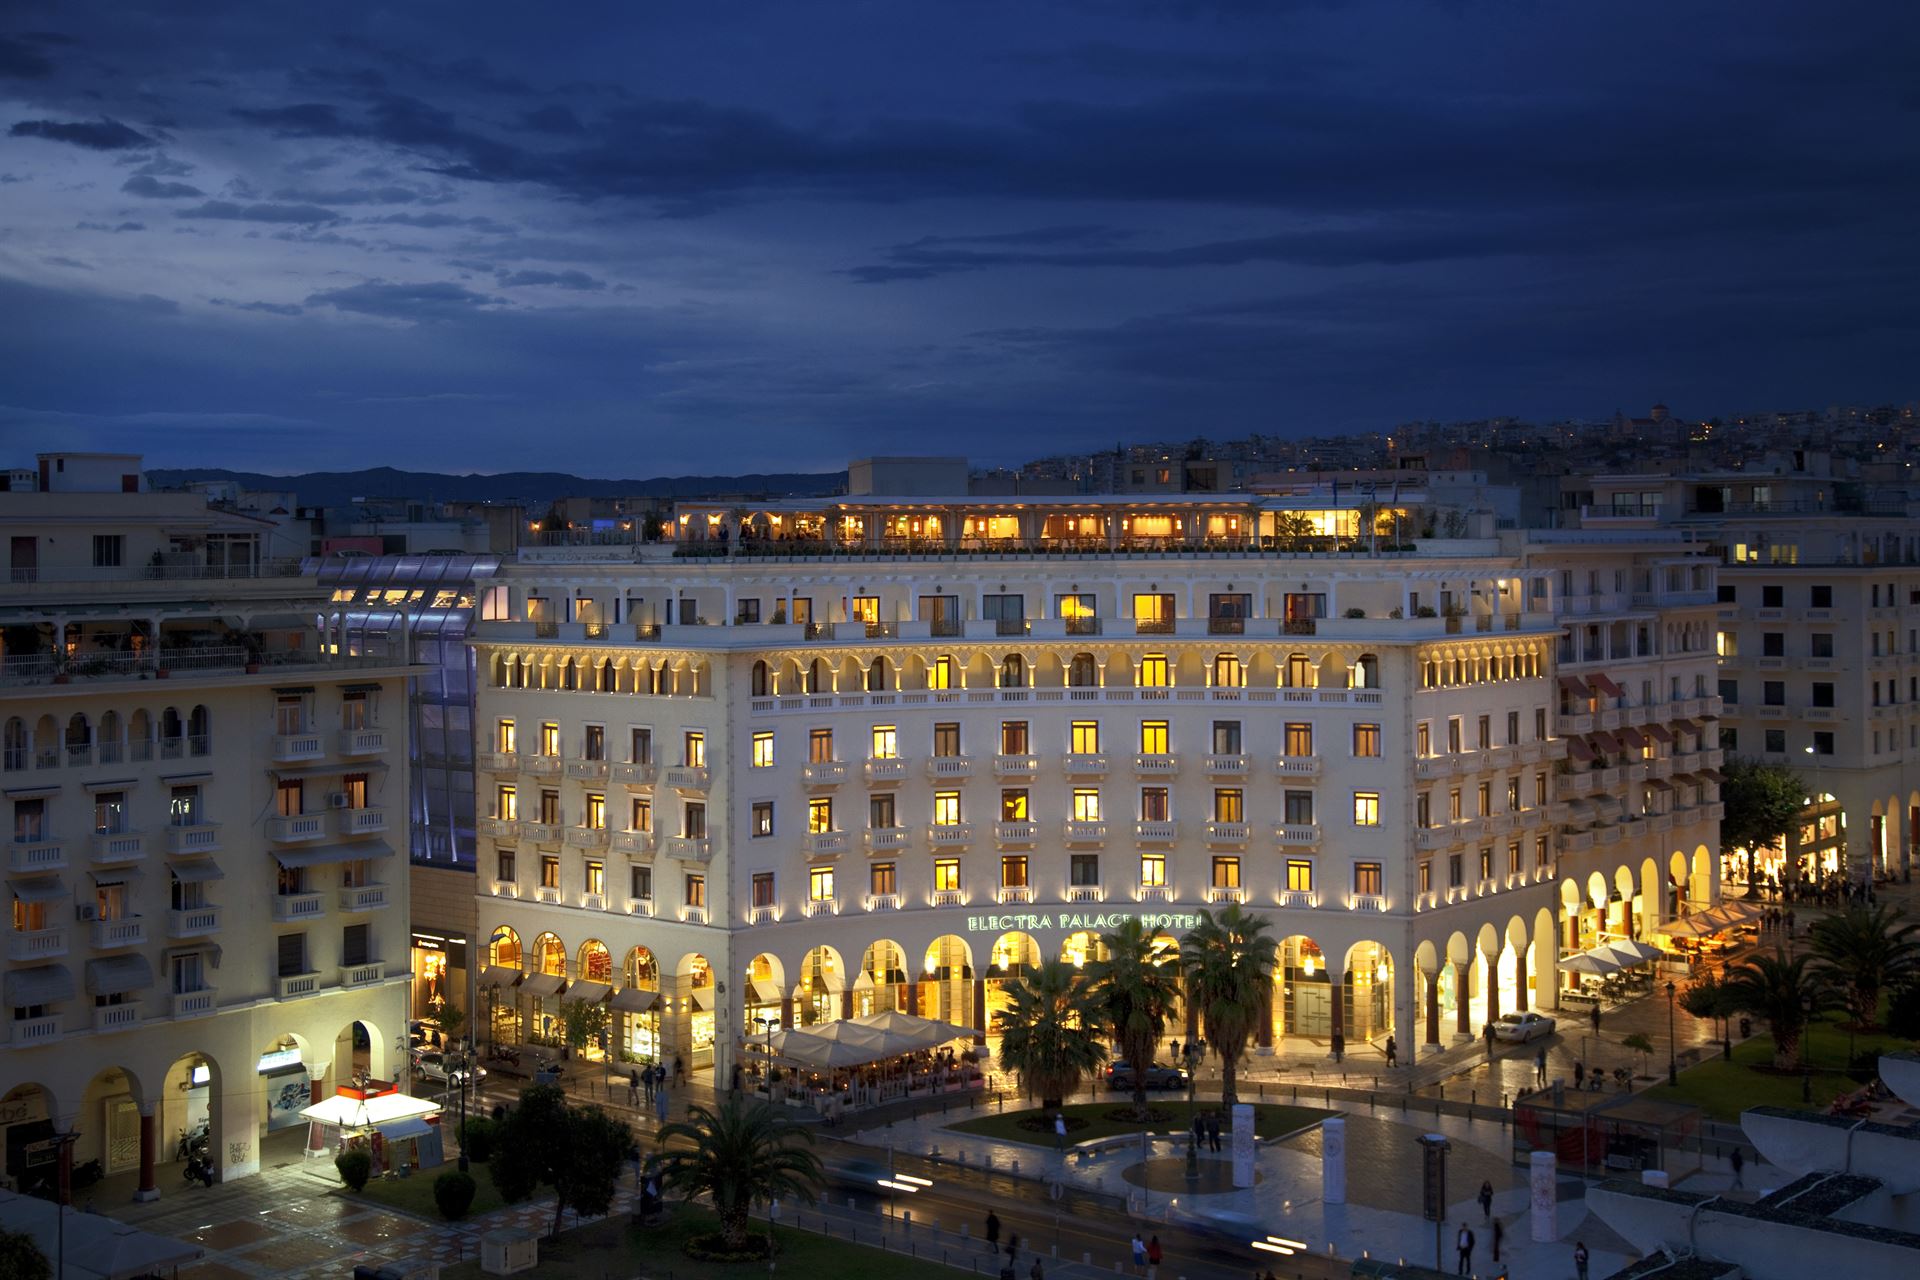 Electra Palace Thessaloniki